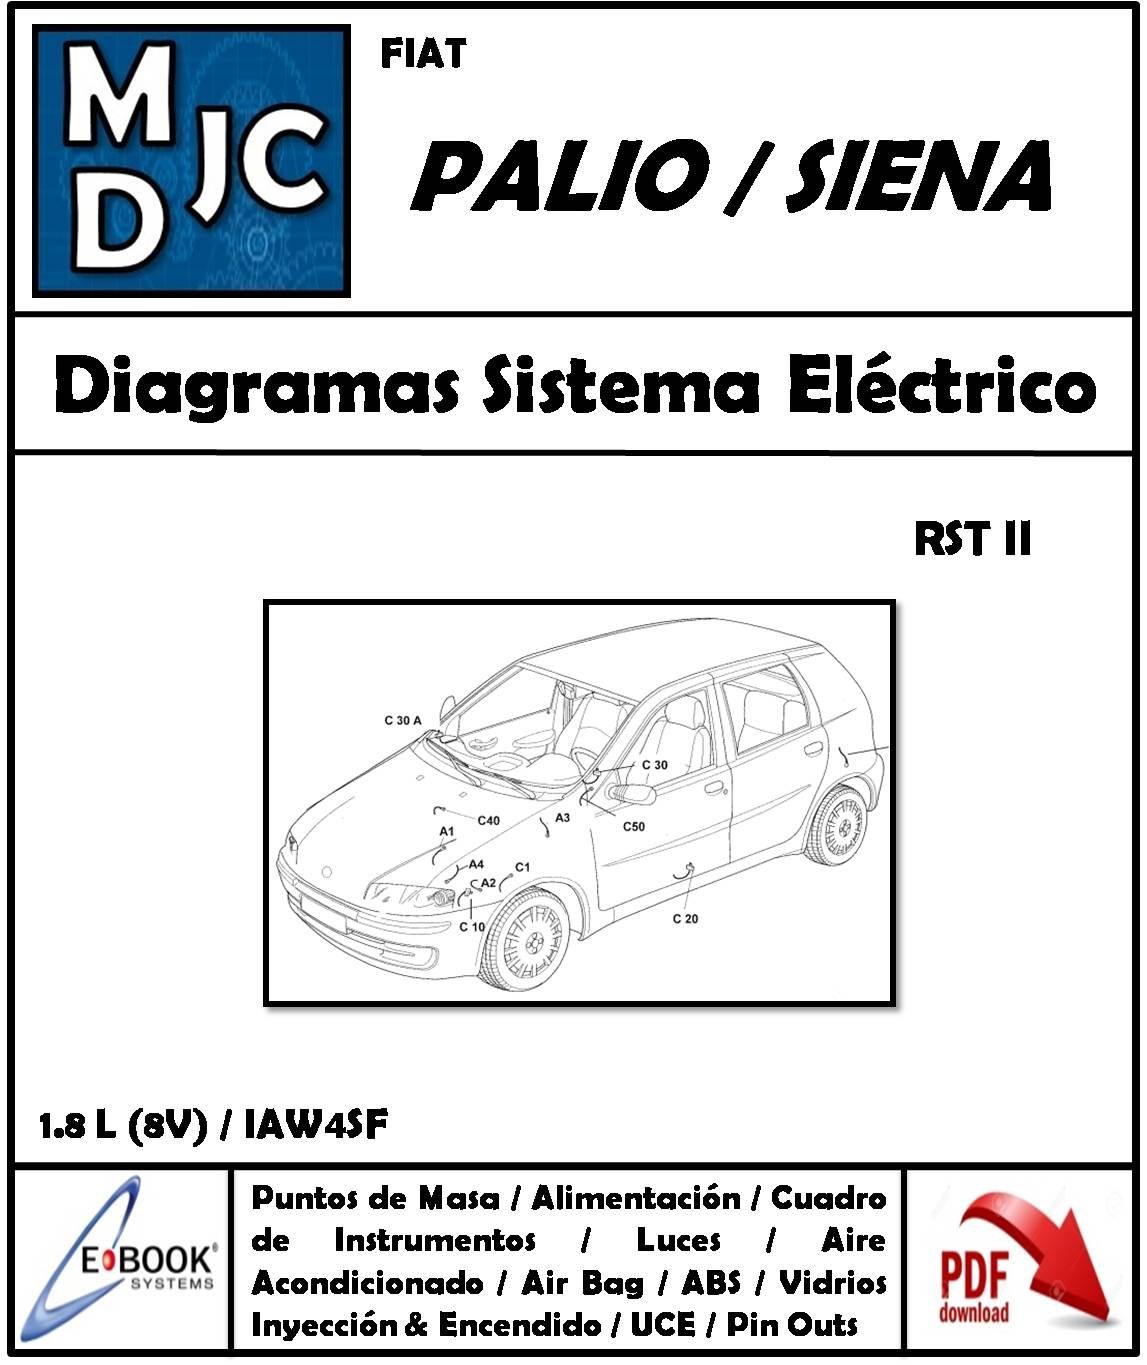 Fiat Palio / Siena